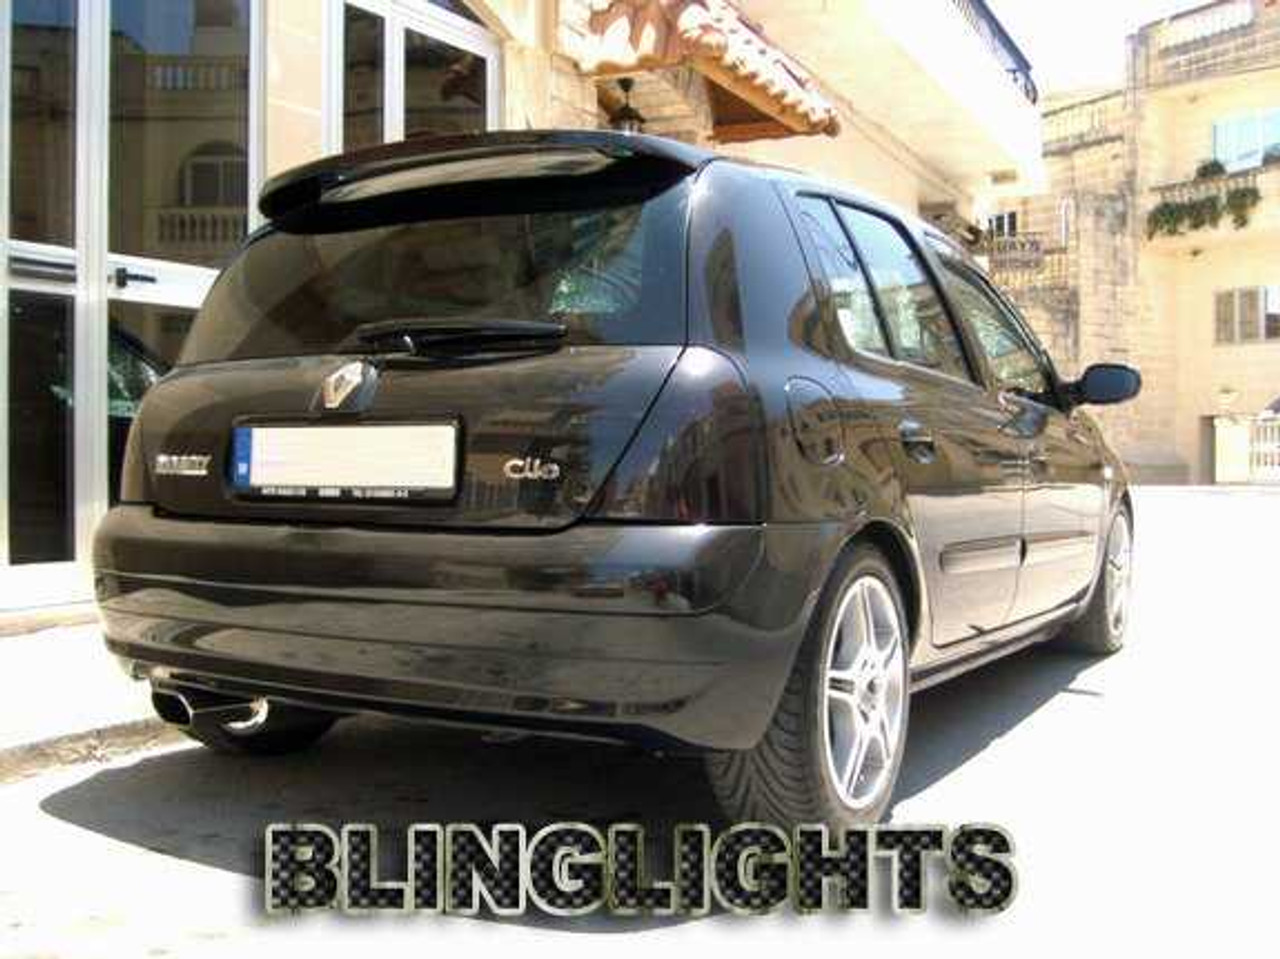 Renault Clio Tinted Smoked Tail Lamp Light Overlays Kit Protection Film